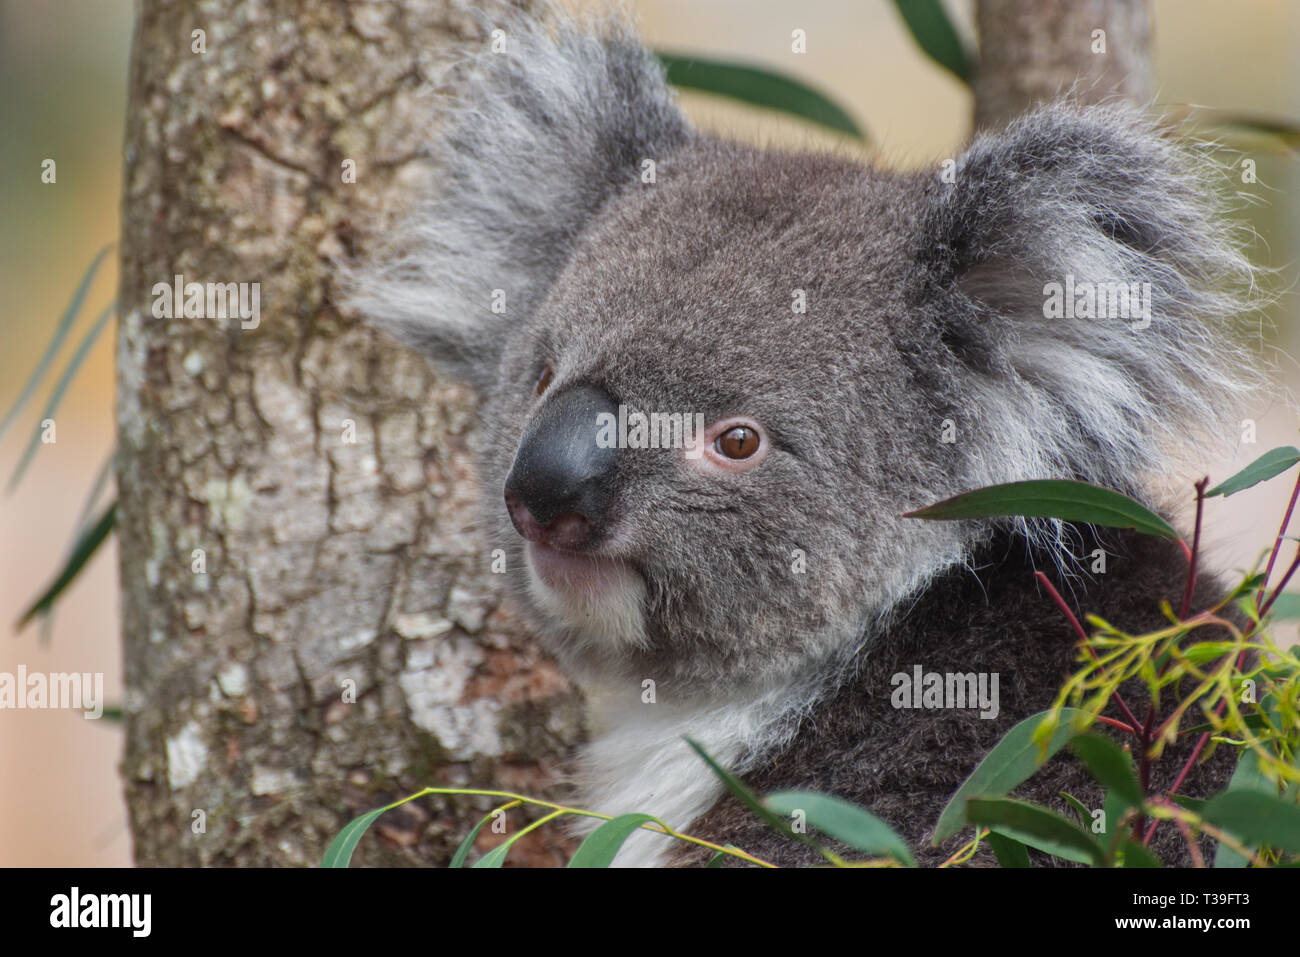 Koala / Phascolarctos cinereus in a tree Stock Photo